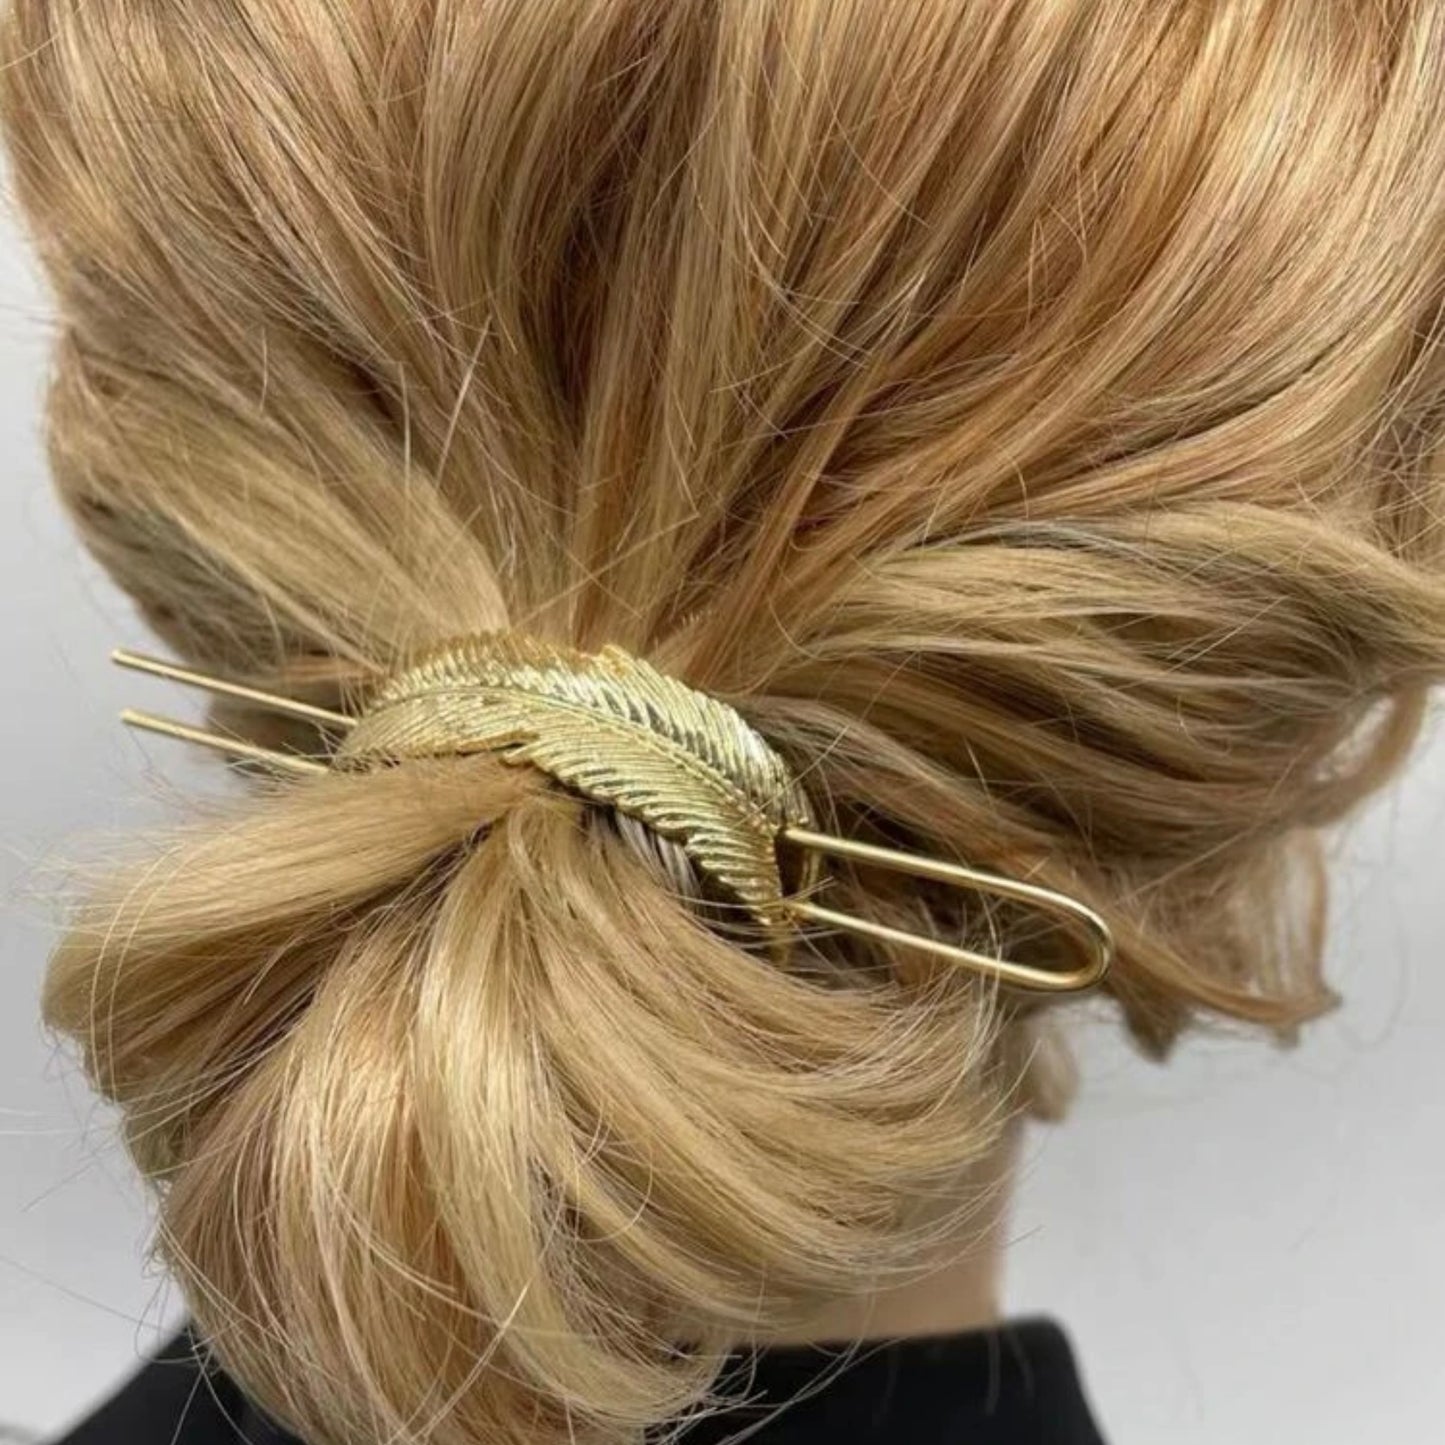 Gold hair accessories